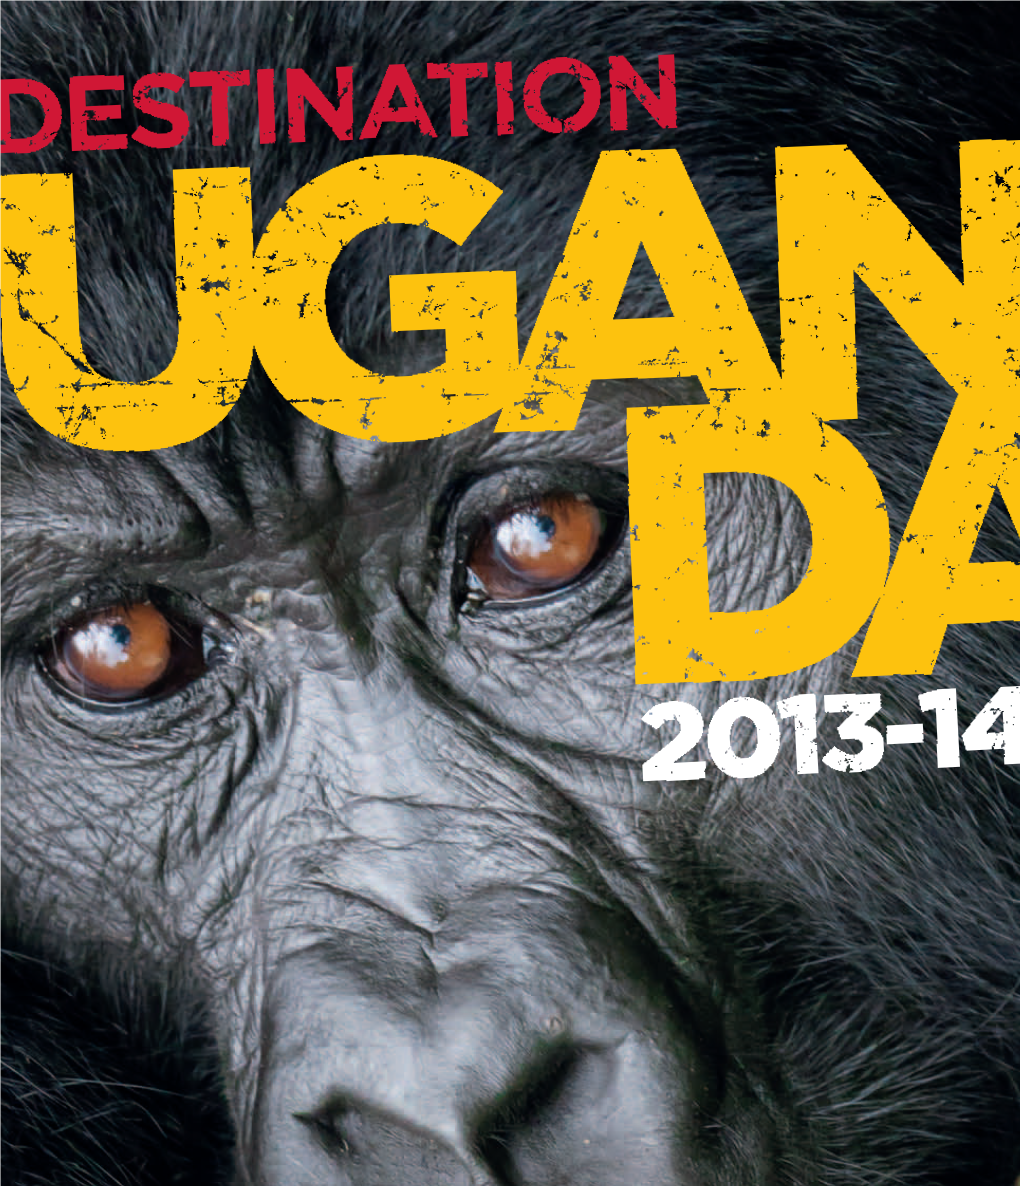 Destination Uganda 2013-14.Pdf